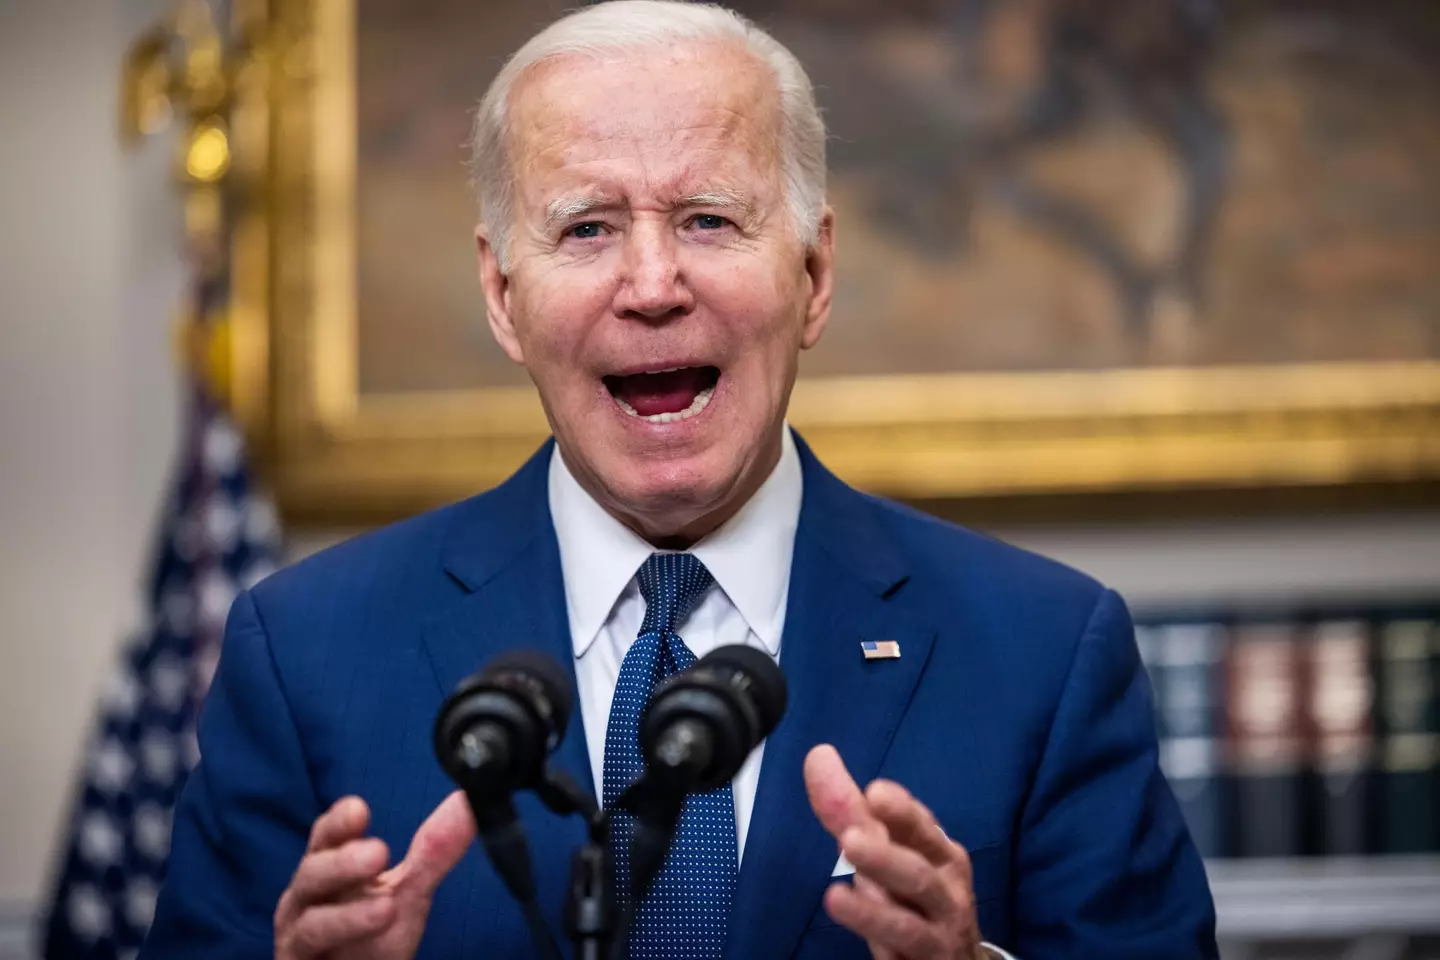 US President Joe Biden has called on Congress to take action on gun control legislation.